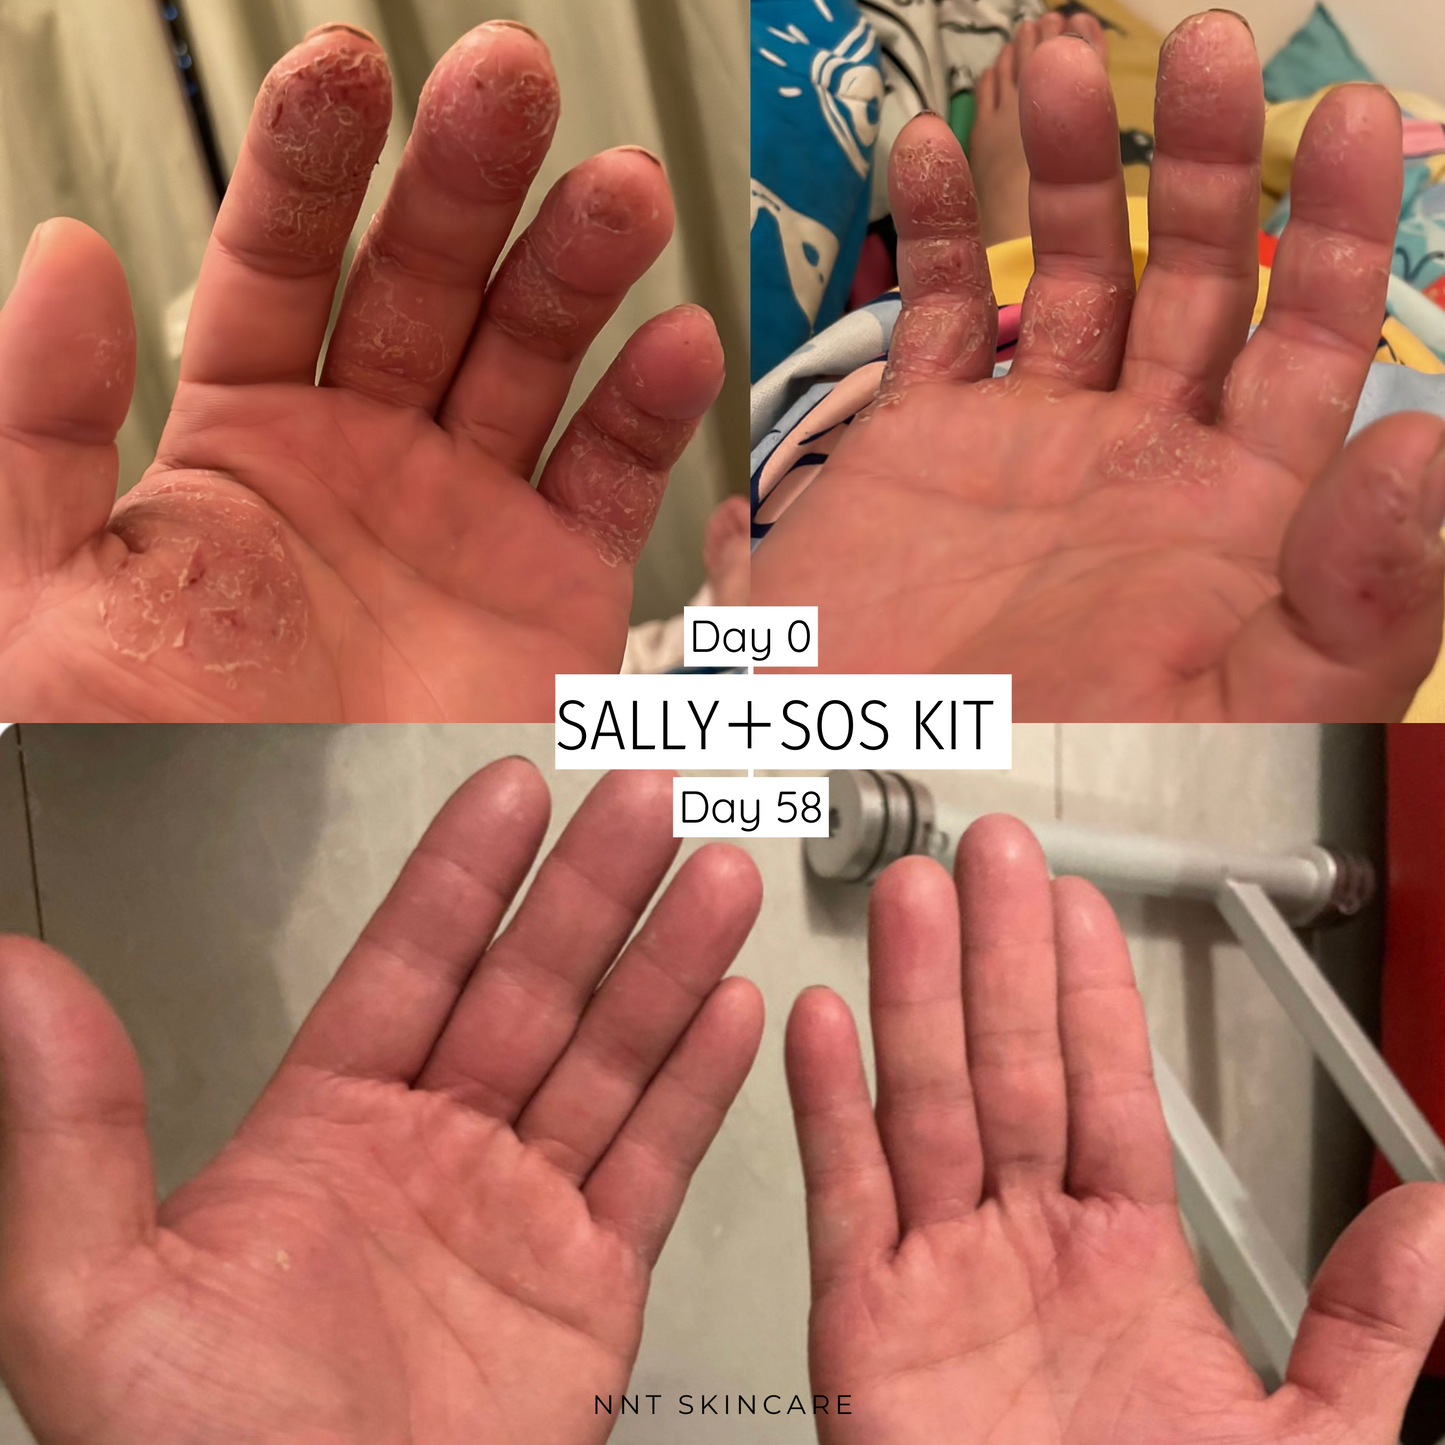 SALLY 有機排毒浴鹽